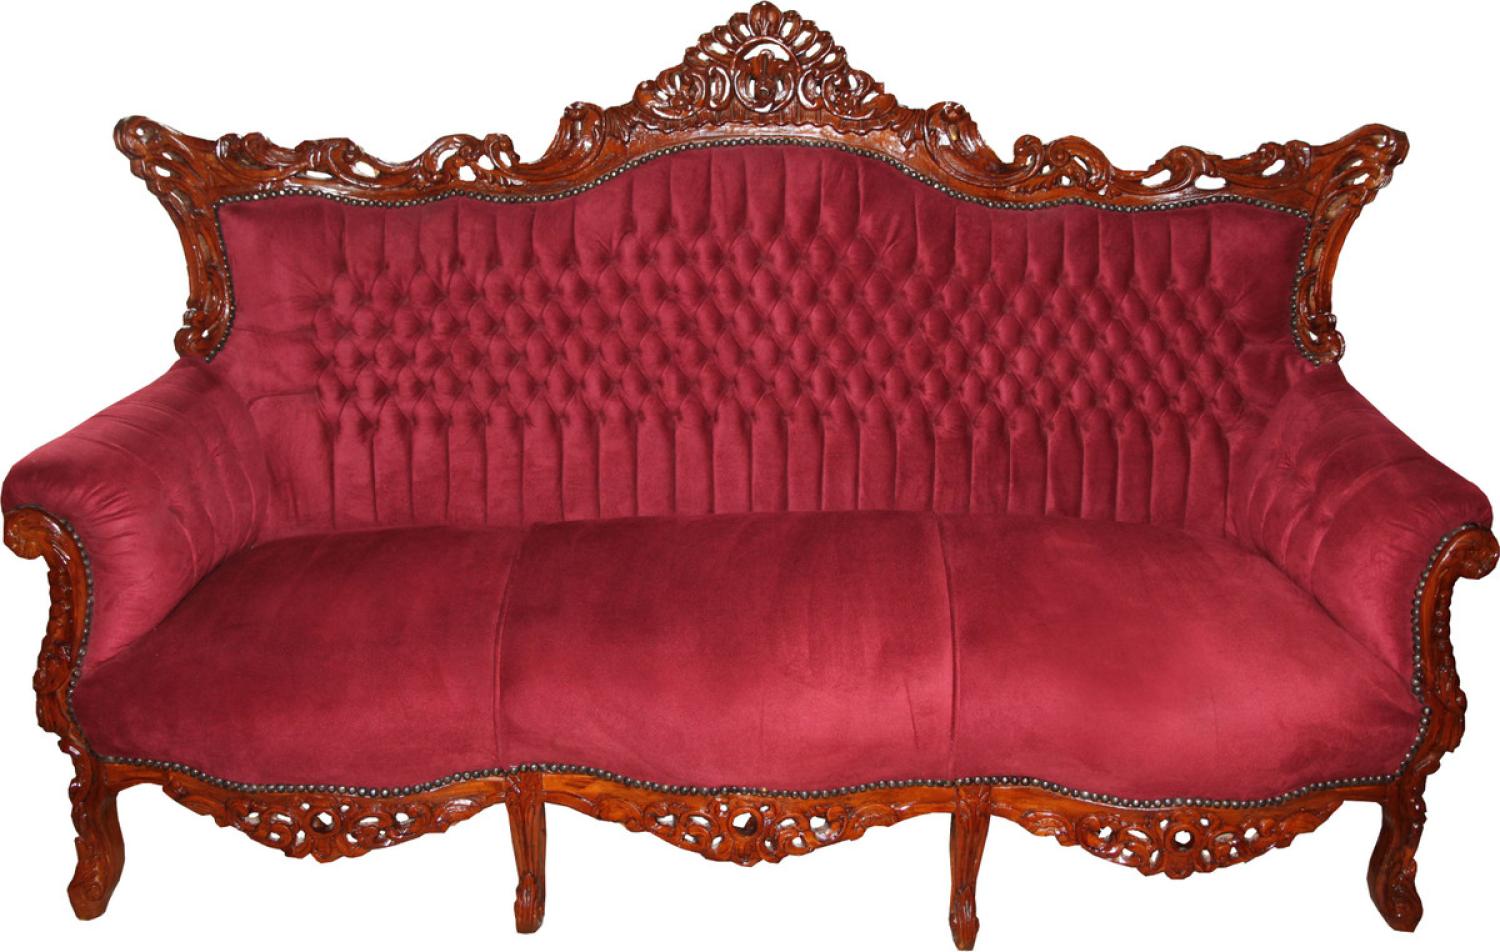 Casa Padrino Barock 3-er Sofa Master in Bordeaux / Braun - Wohnzimmer Möbel Couch Lounge - Limited Edition Bild 1